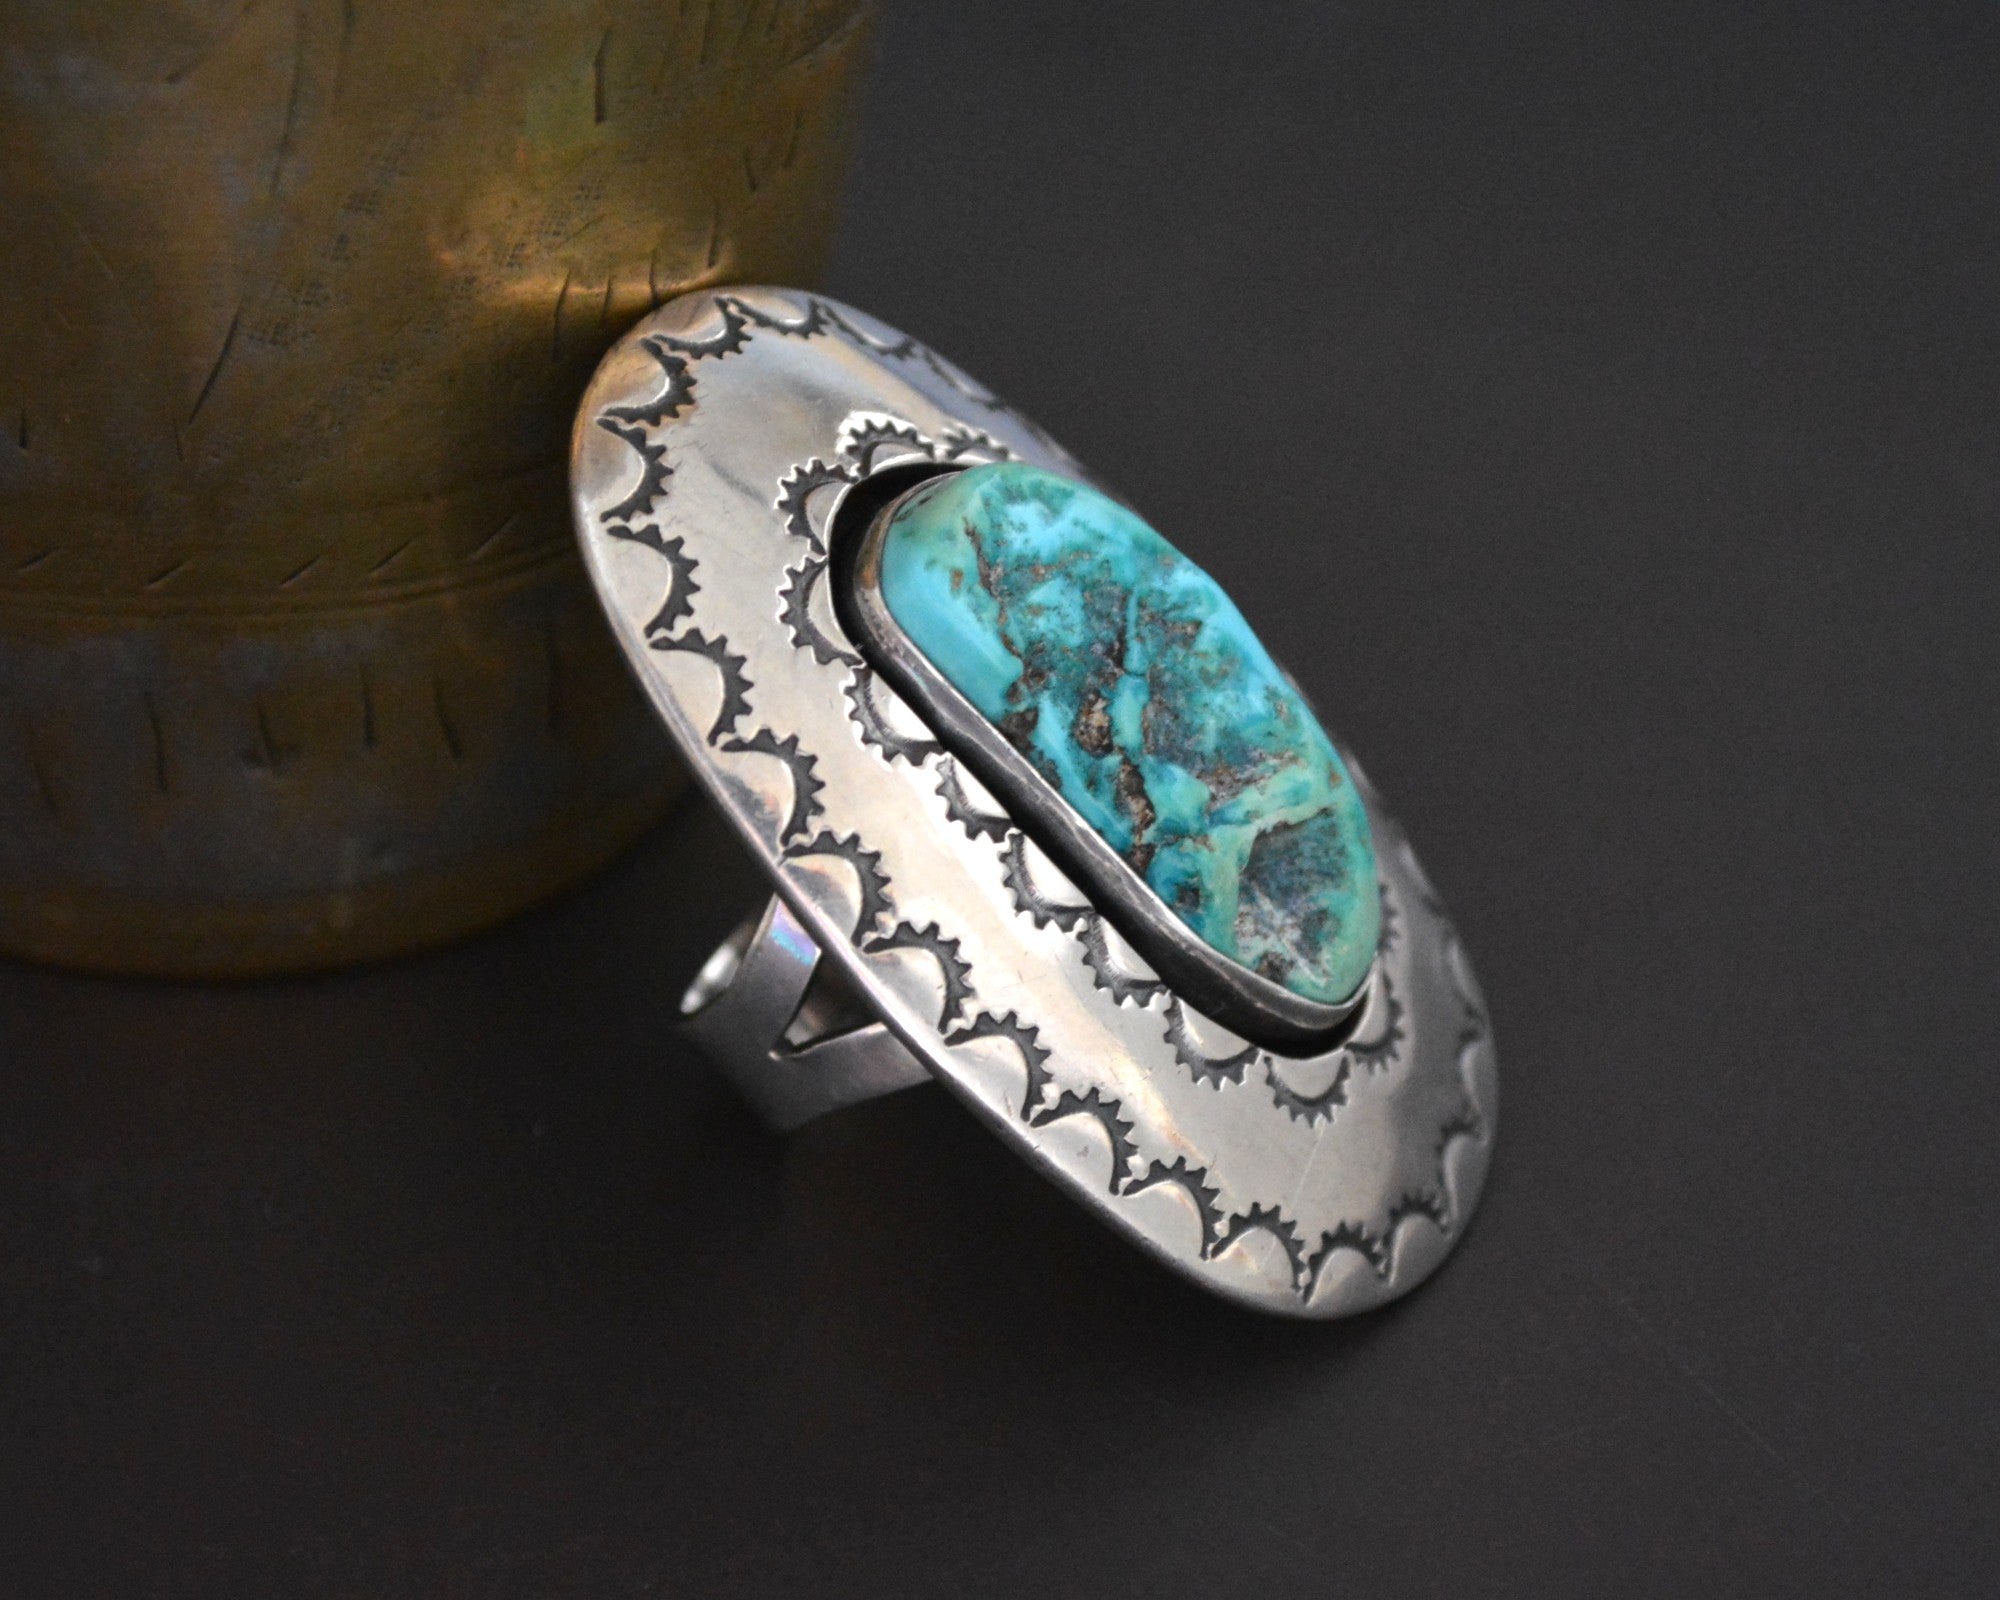 Splendid Native American Turquoise Ring - Size 8.5